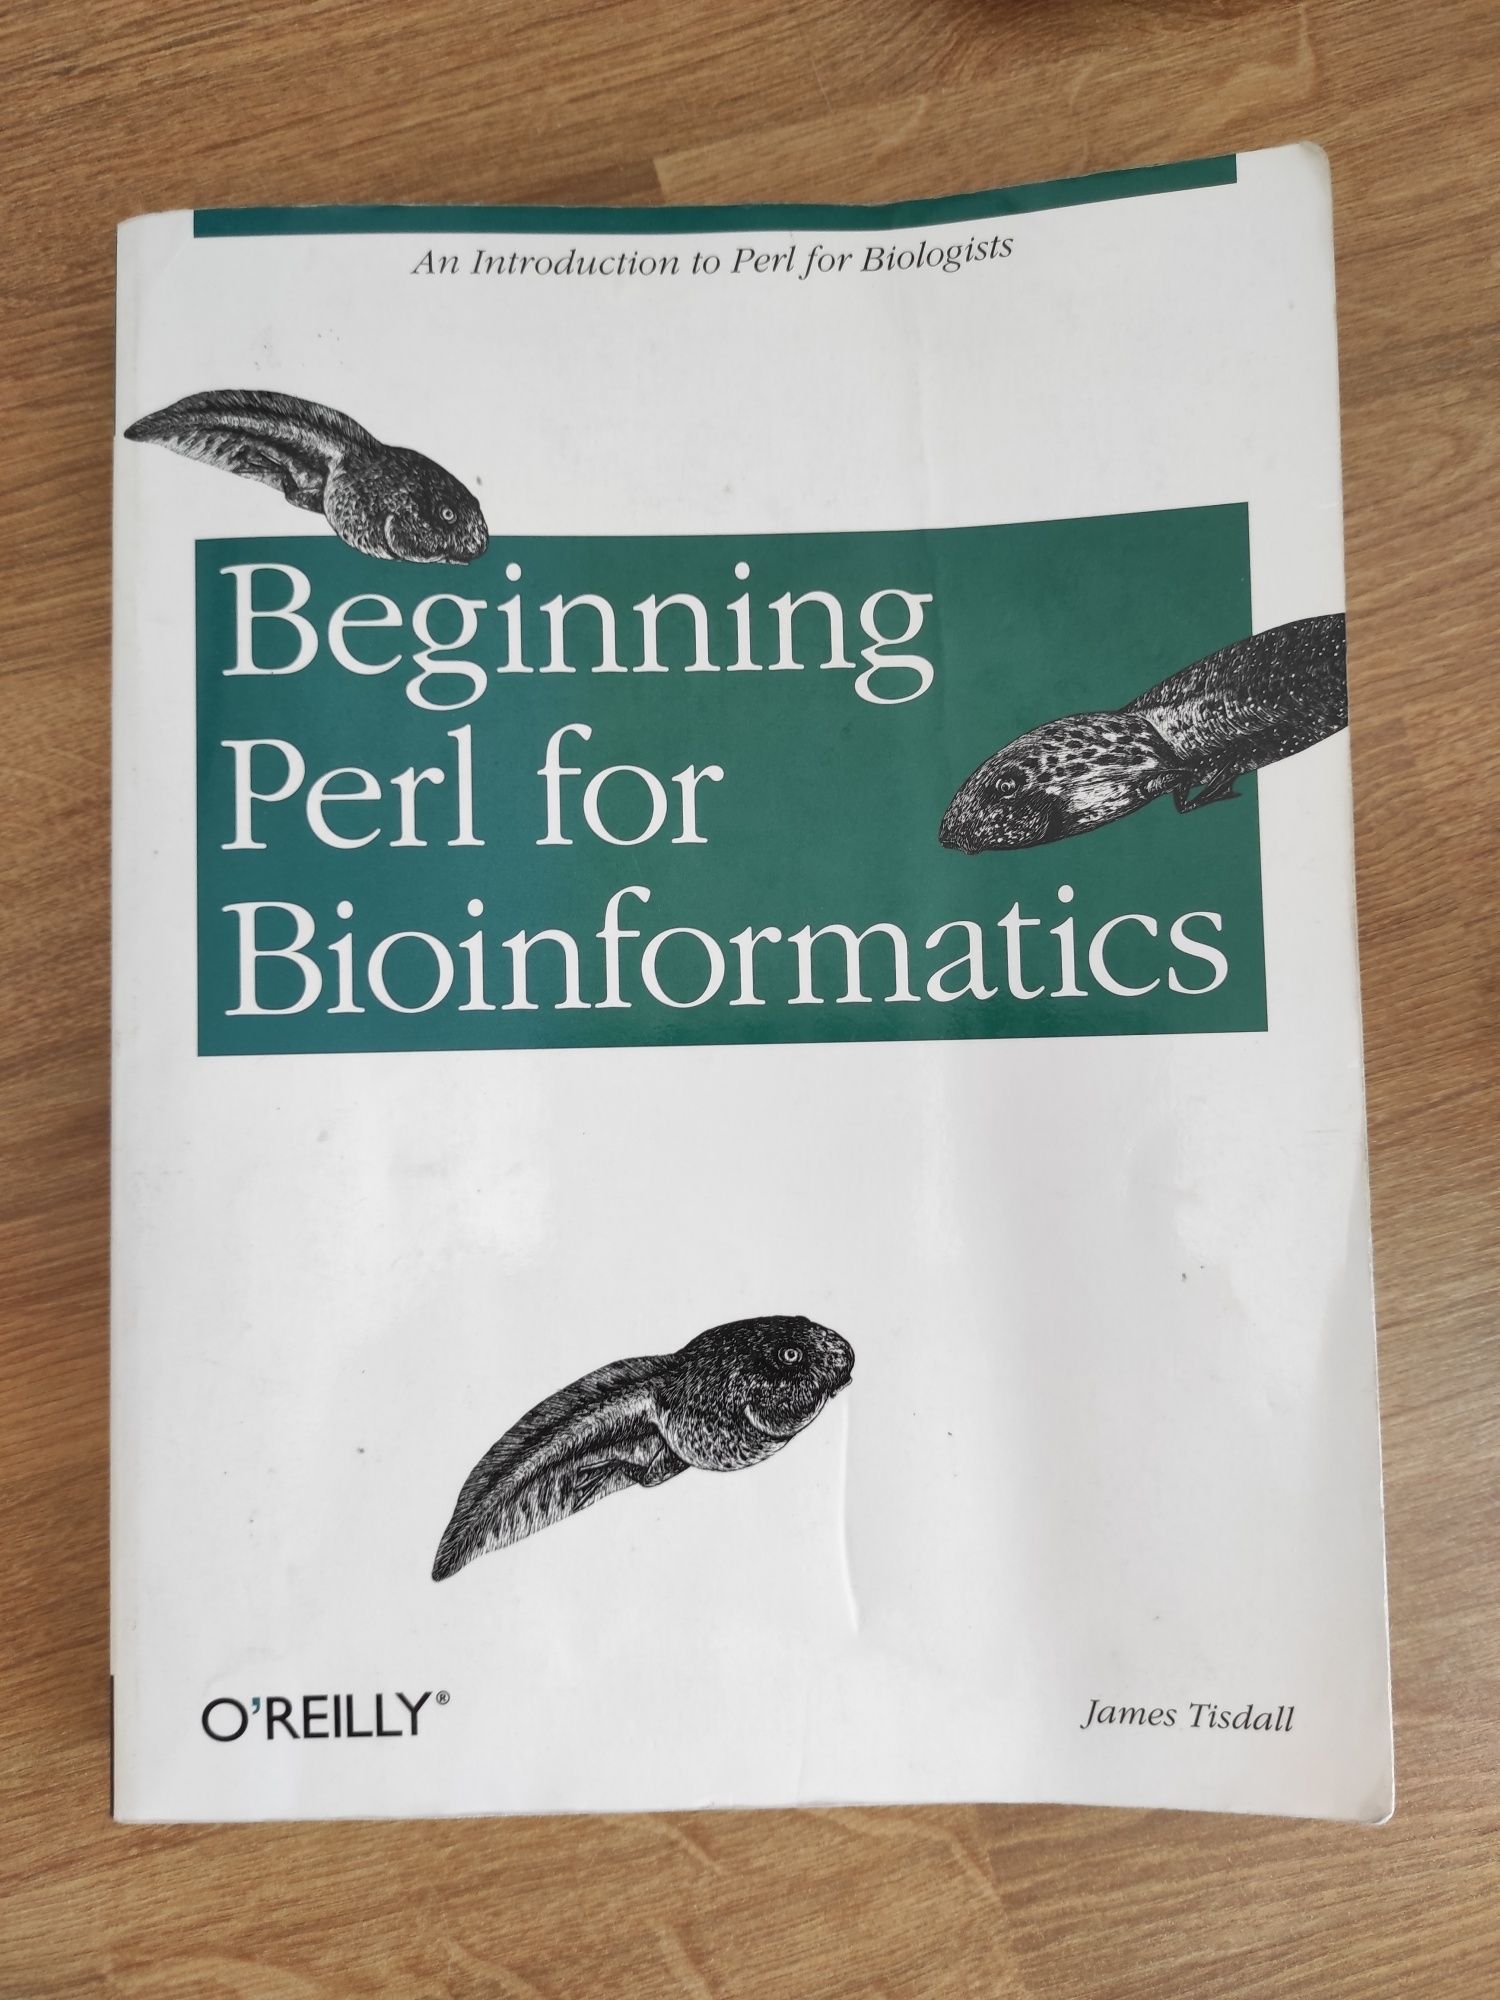 Livro "Beginning Perl for Bioinformatics"